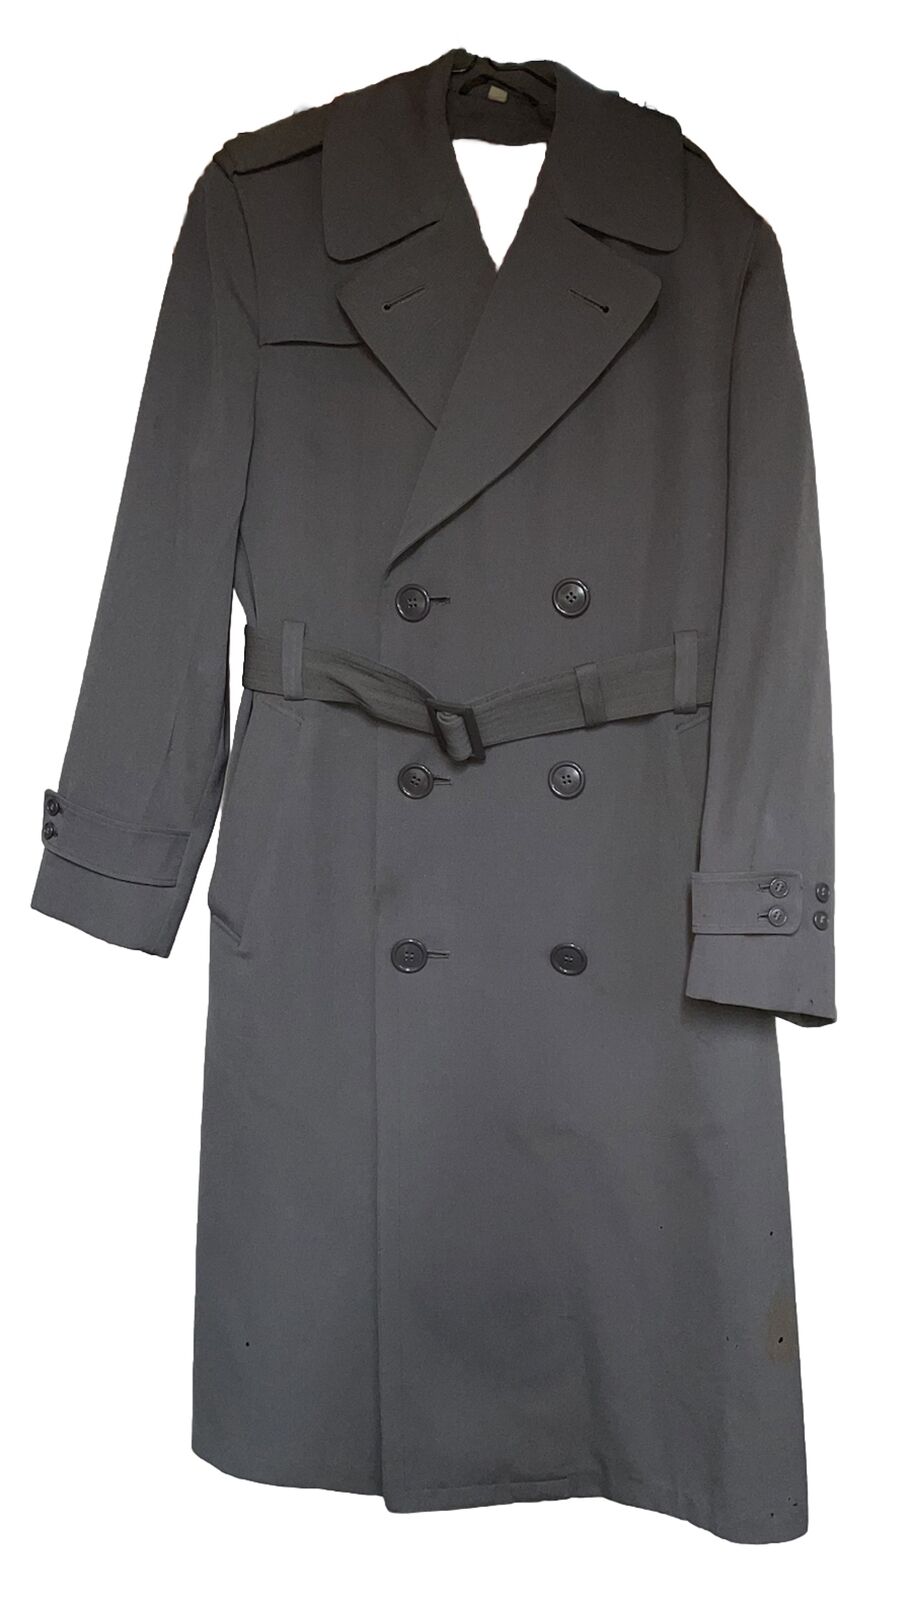 Regulation Army Wool Overcoat, WW2 Vintage Long Coat Jacket (Men Sz. 36R)